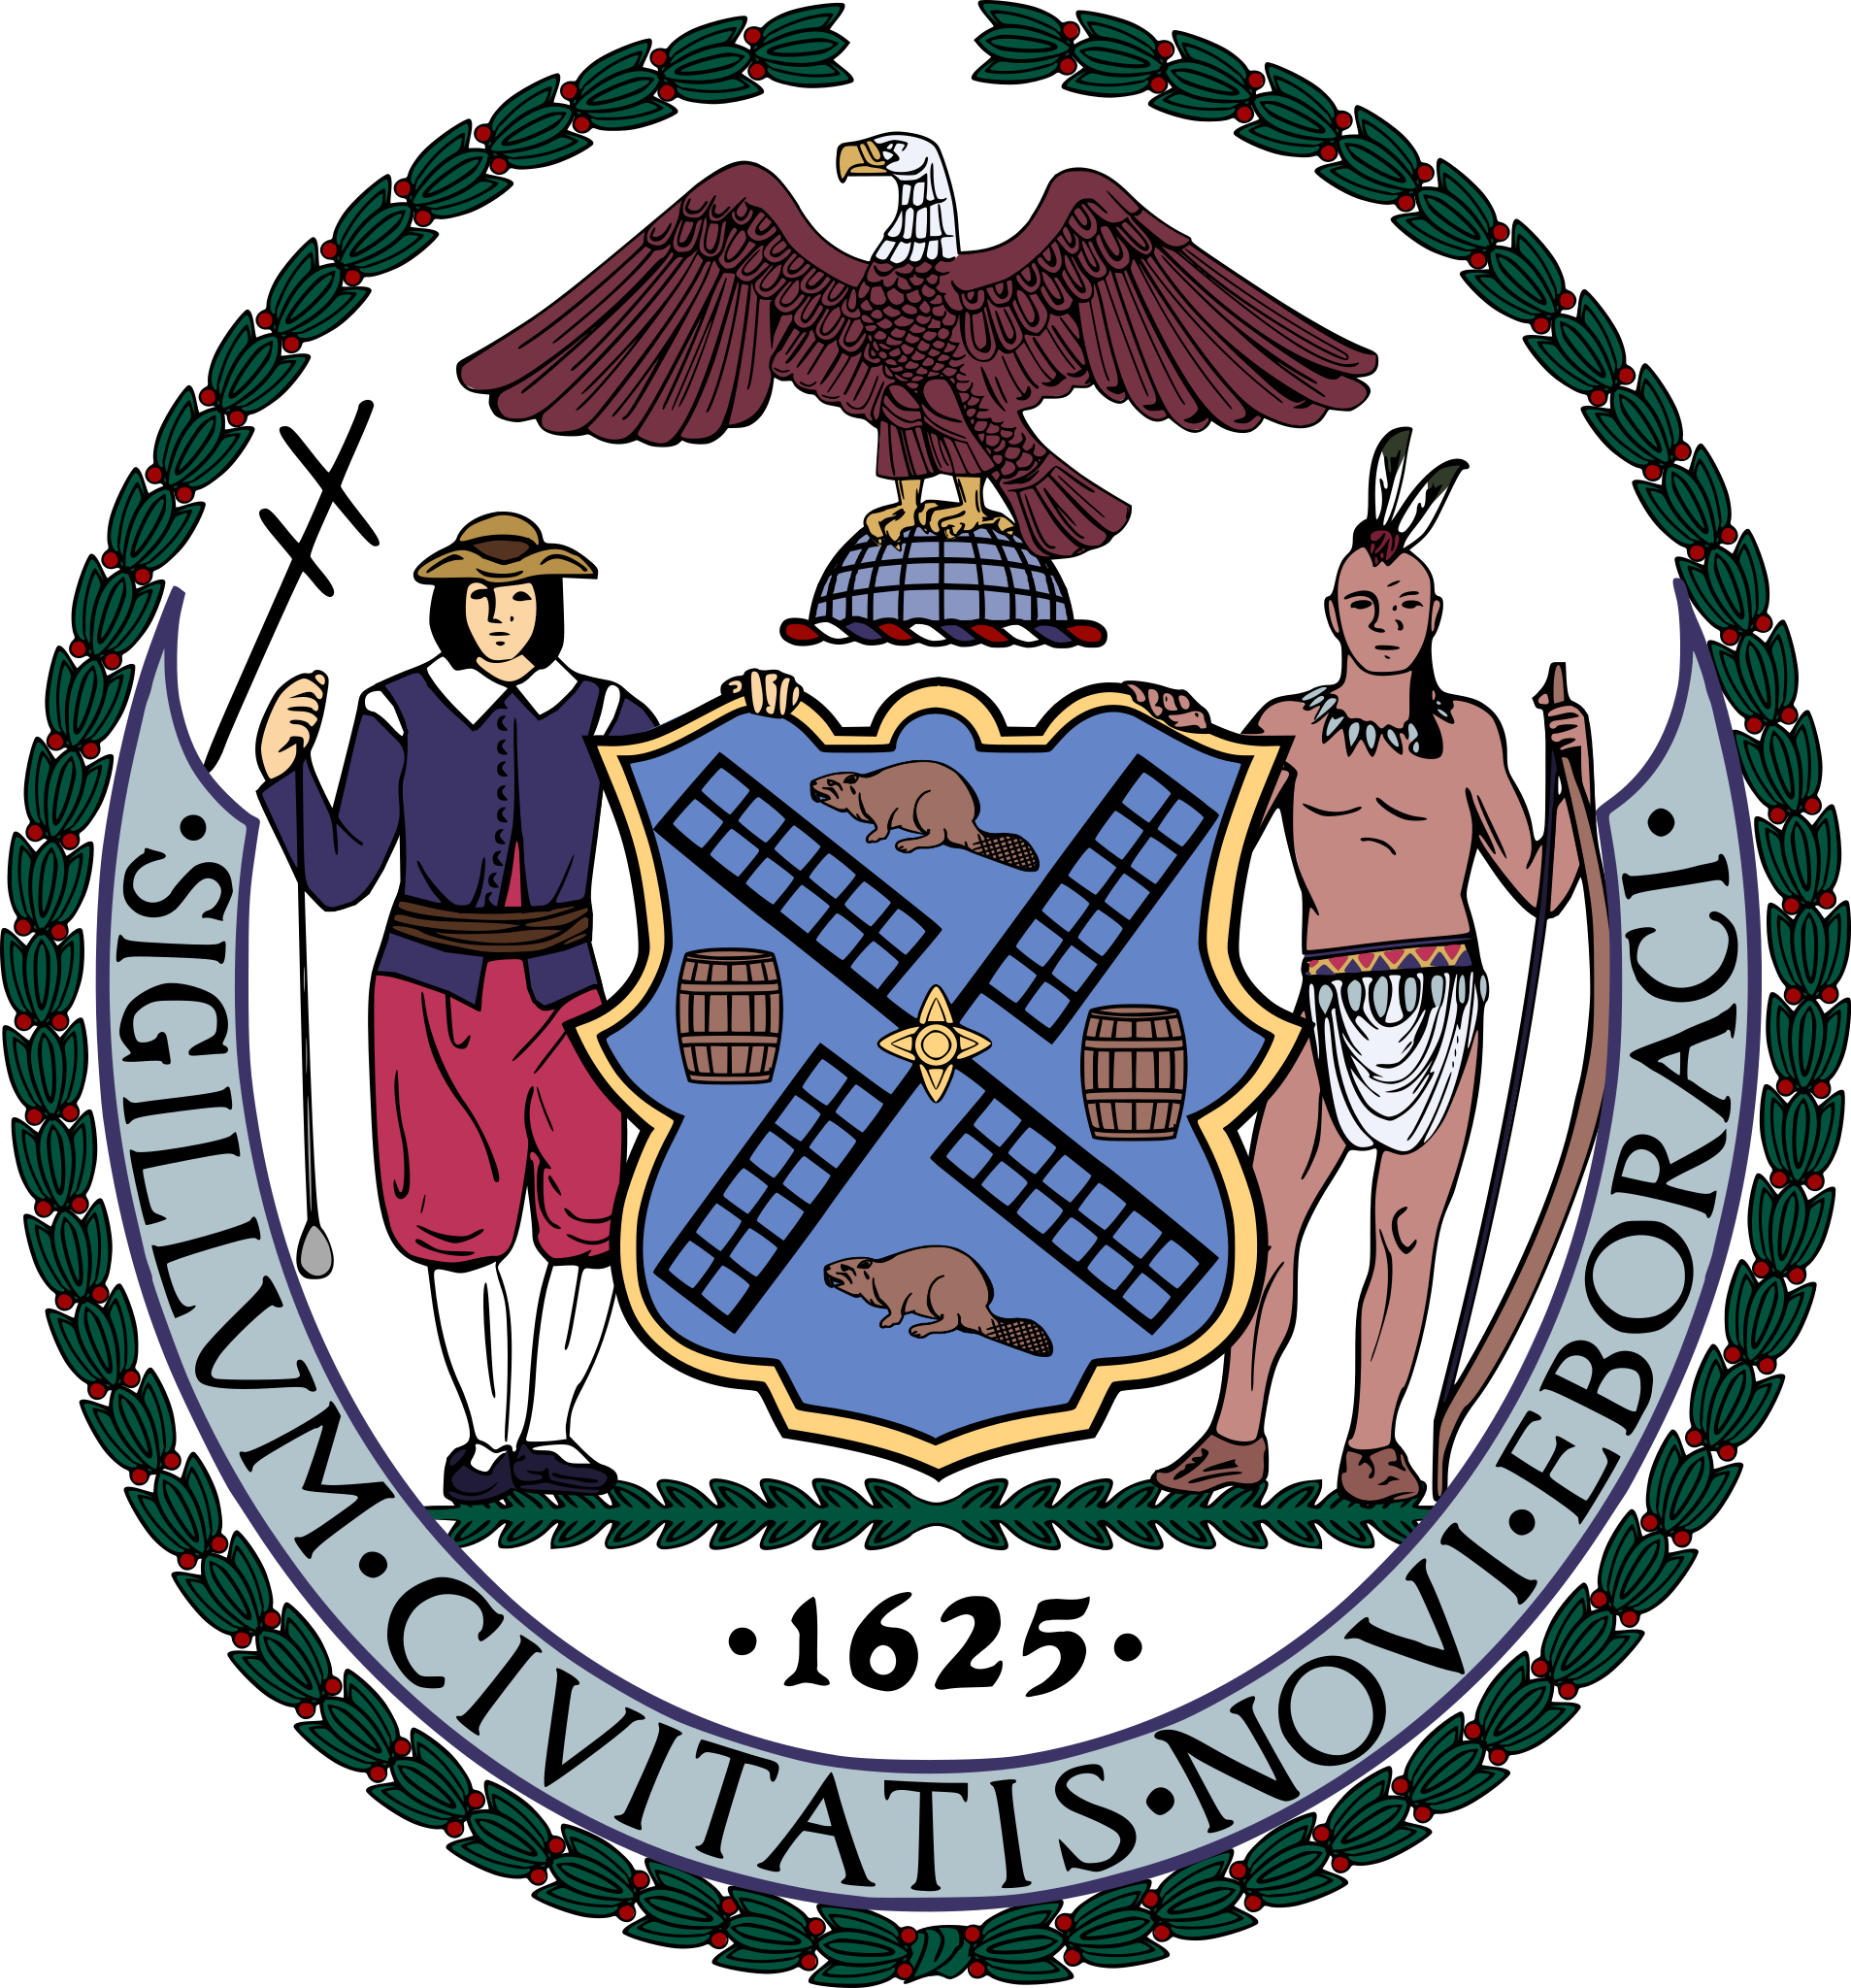 New York City logo and seal